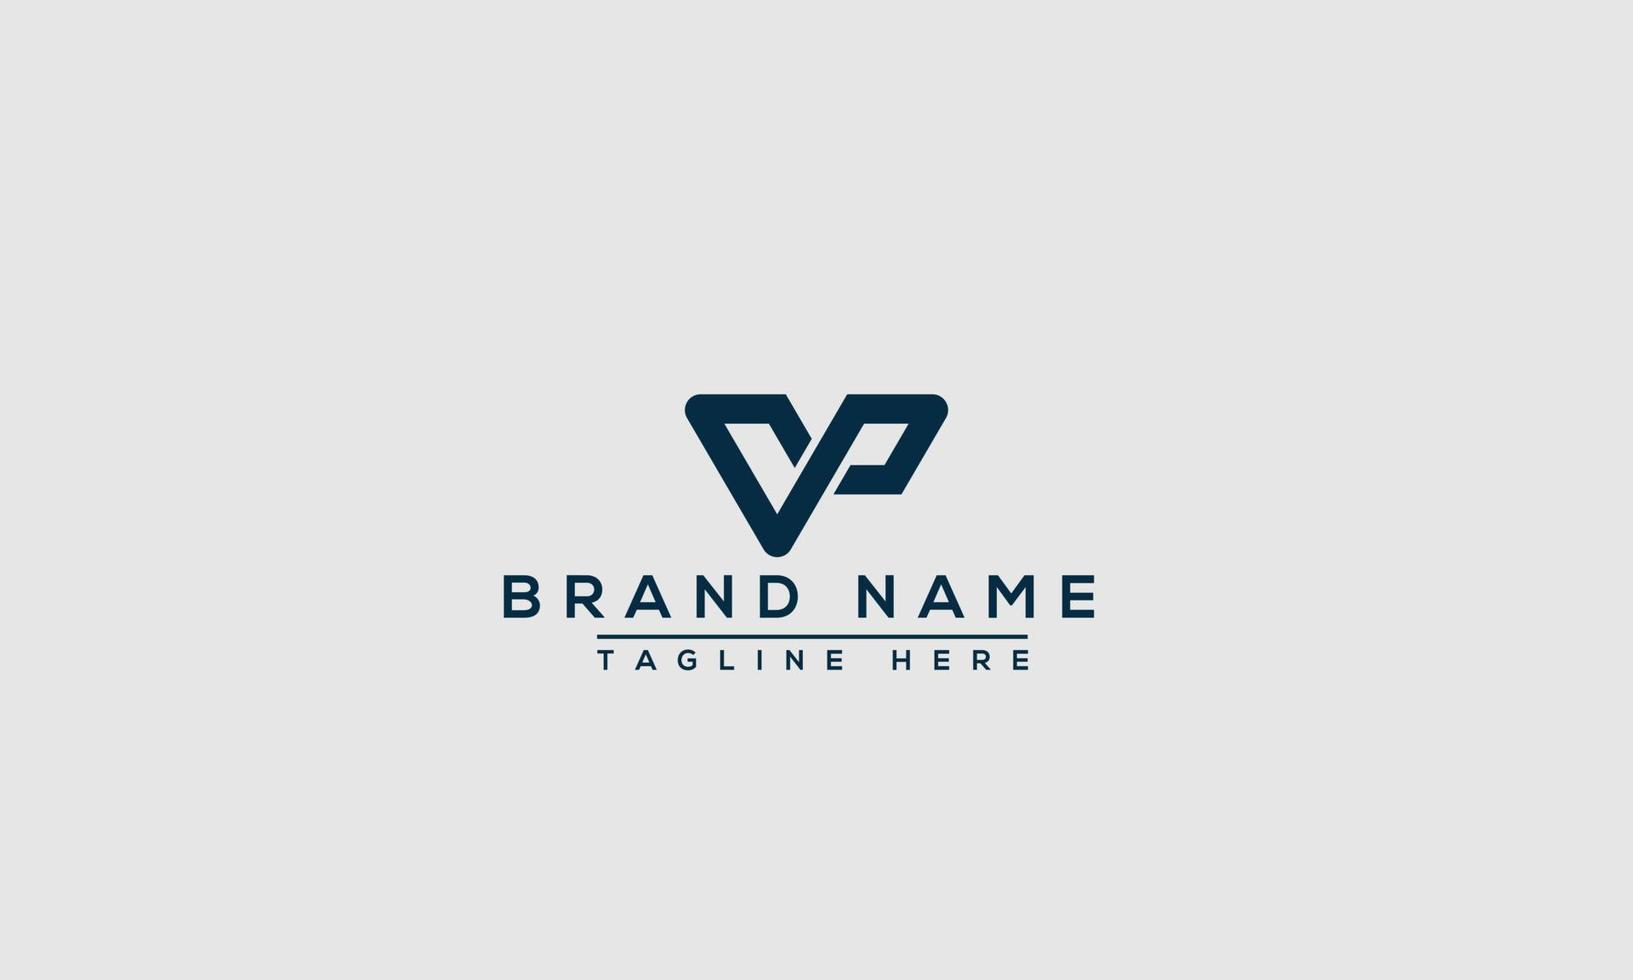 elemento de branding gráfico de vetor de modelo de design de logotipo vp.